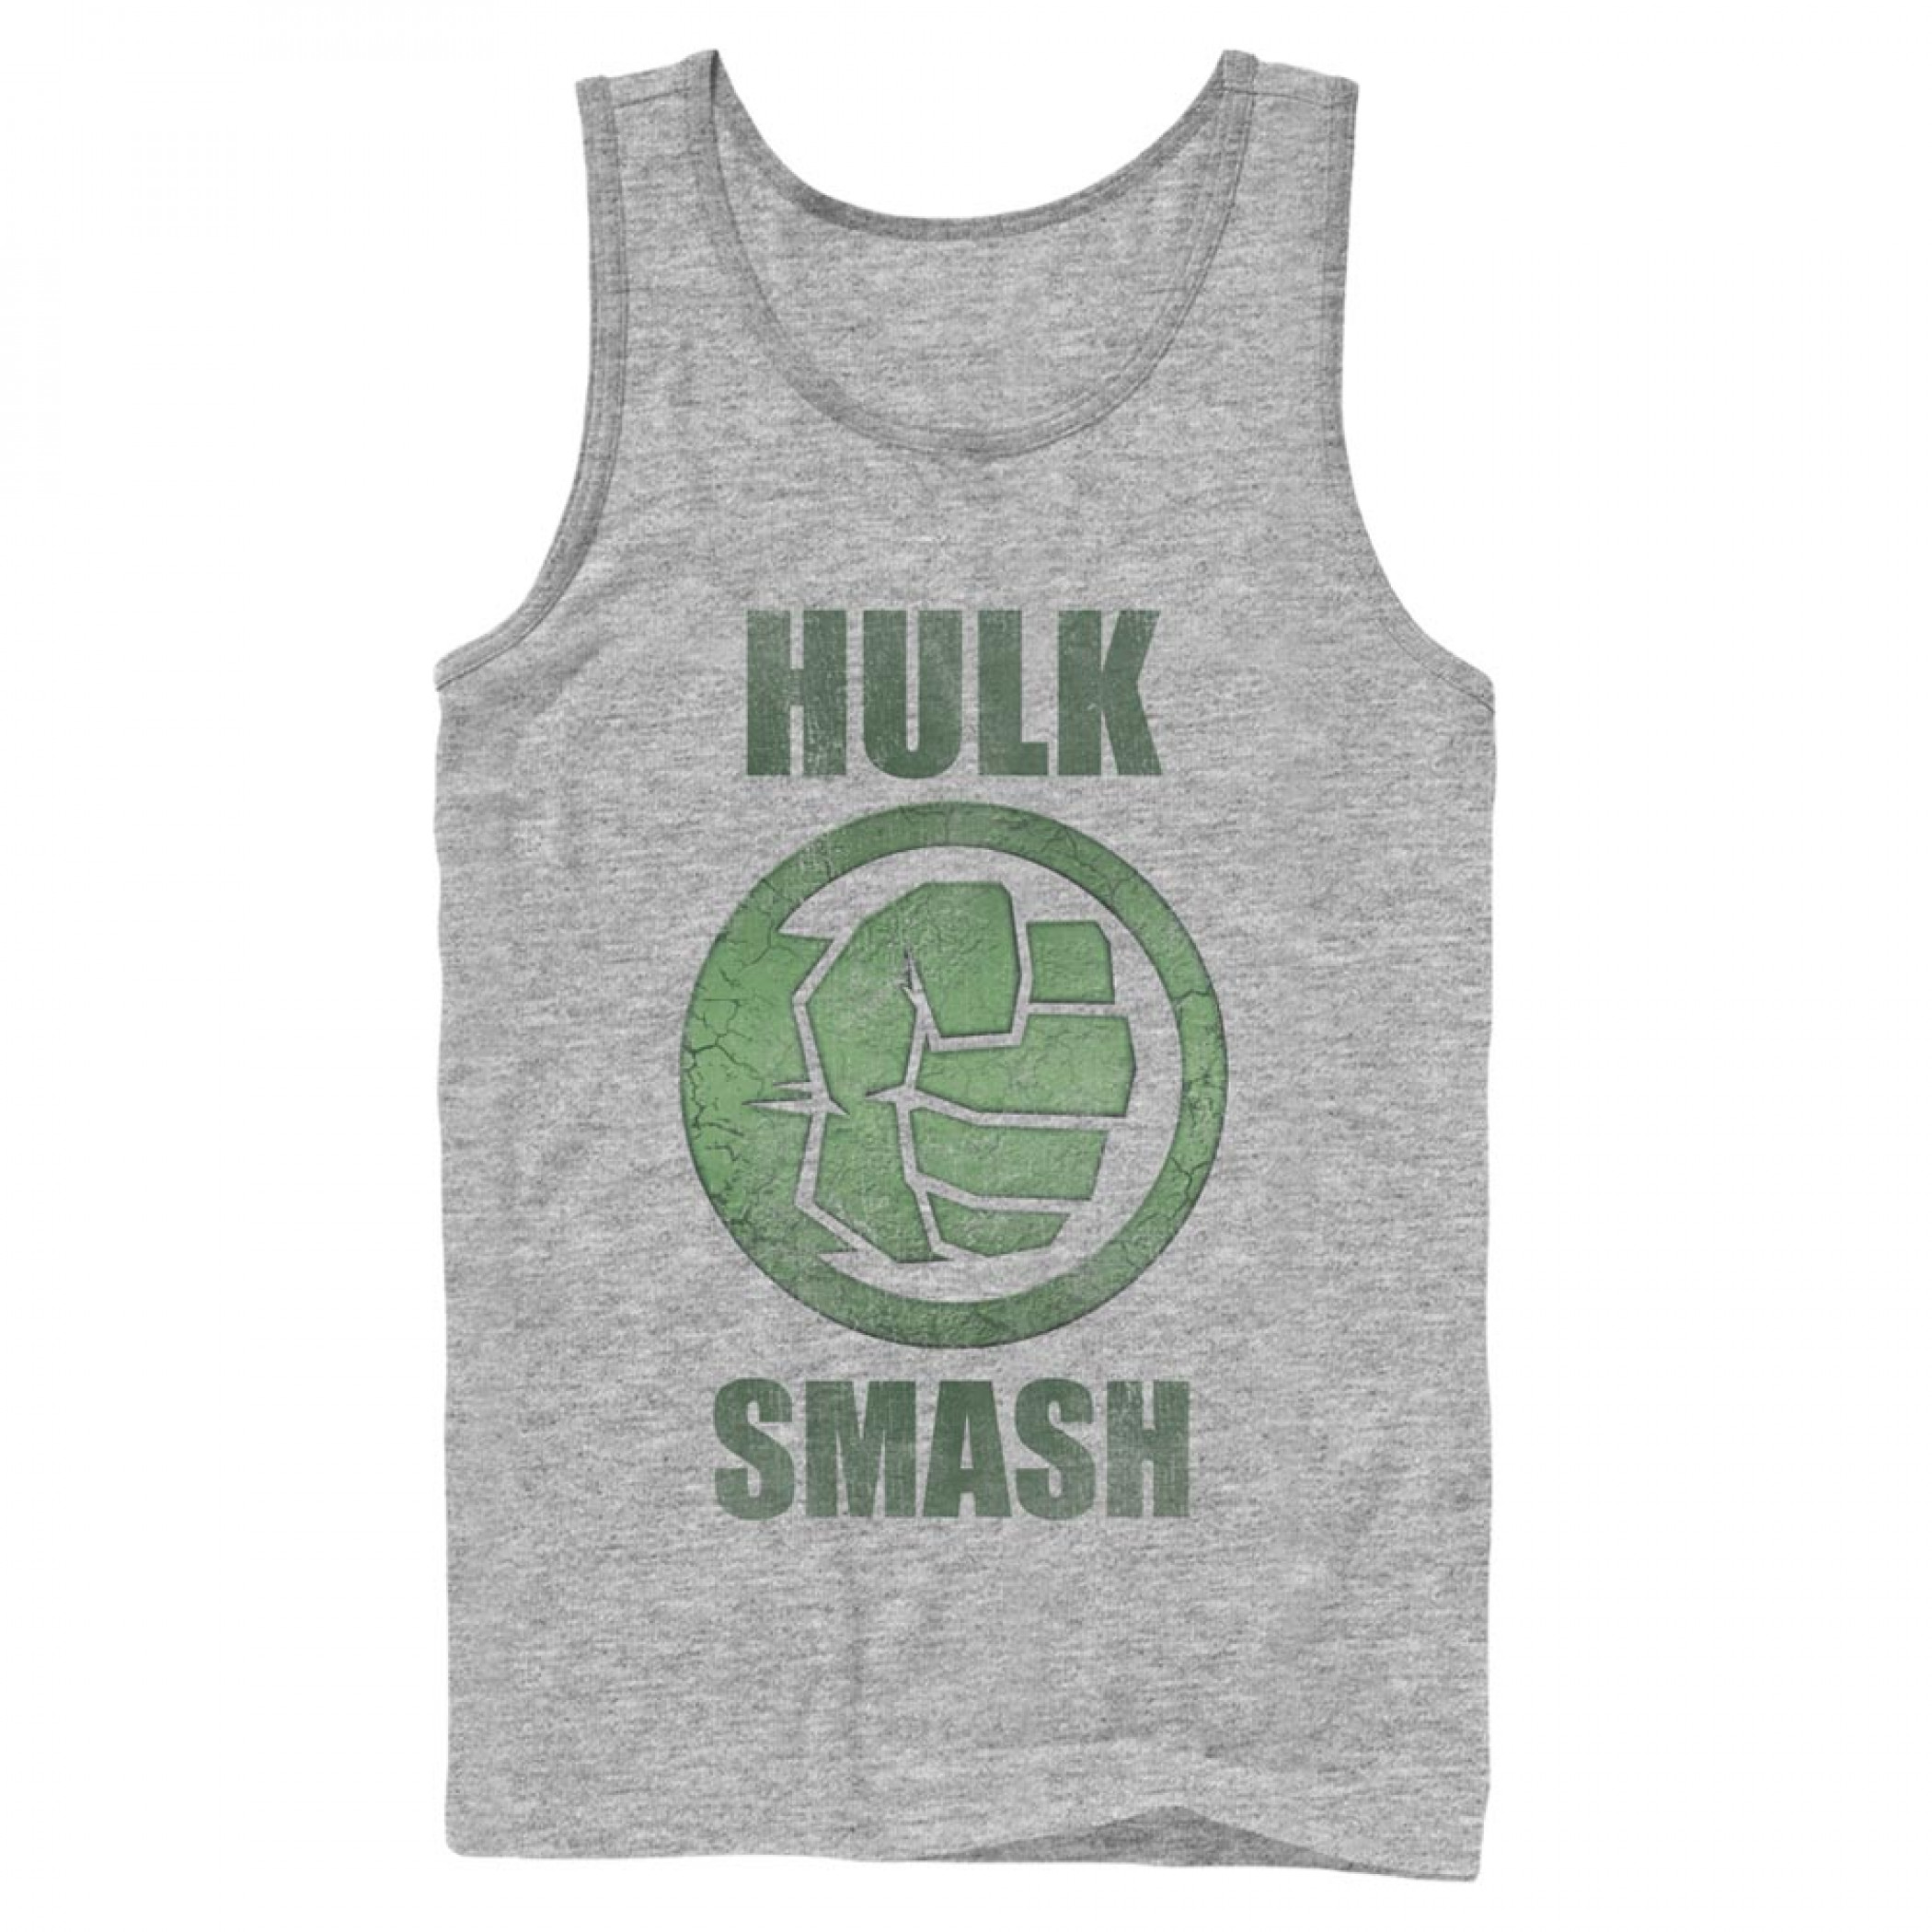 Hulk Smash Fist Green on Grey Tank